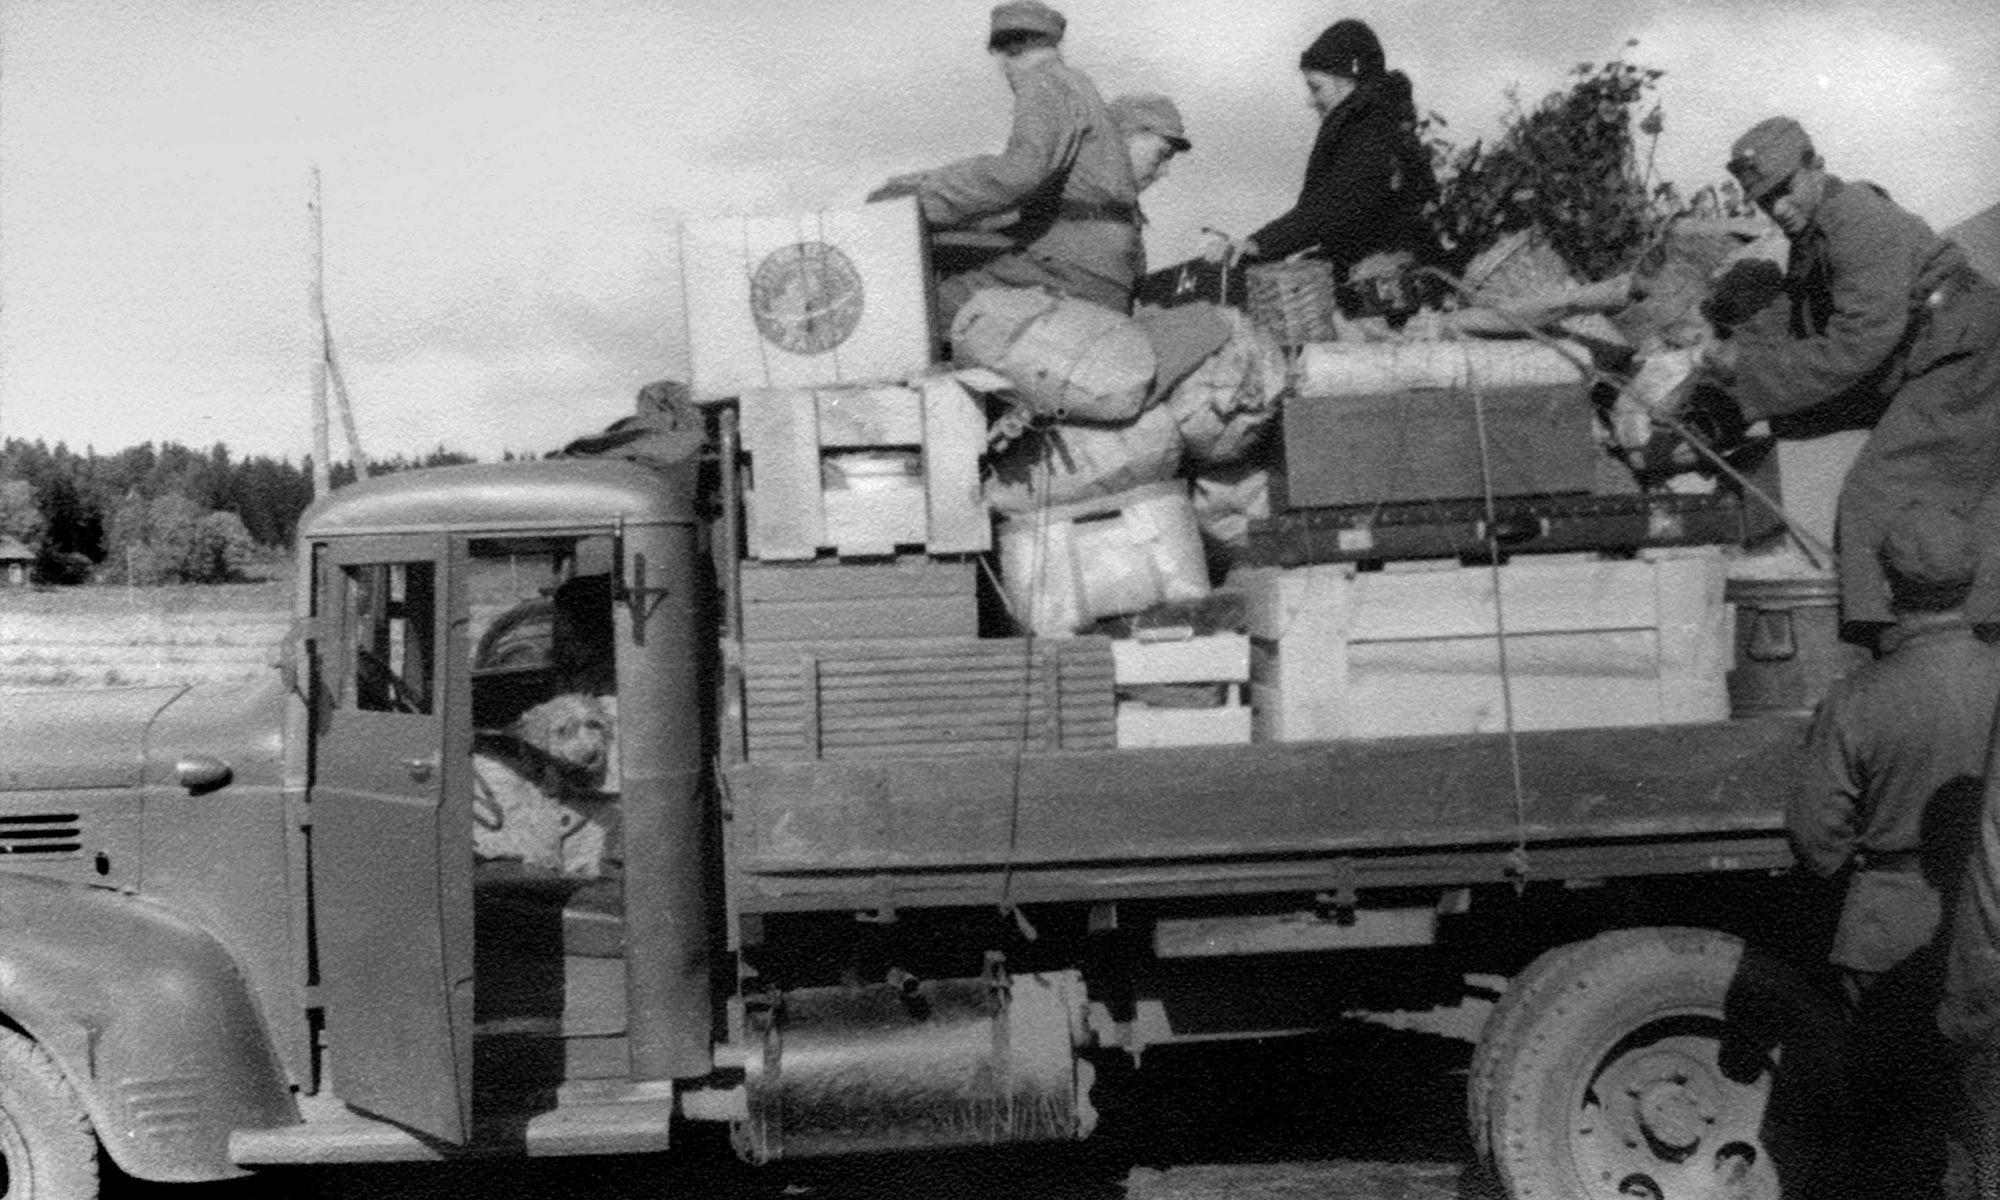 Porkkala evakuointi evakuering evacuation 1944